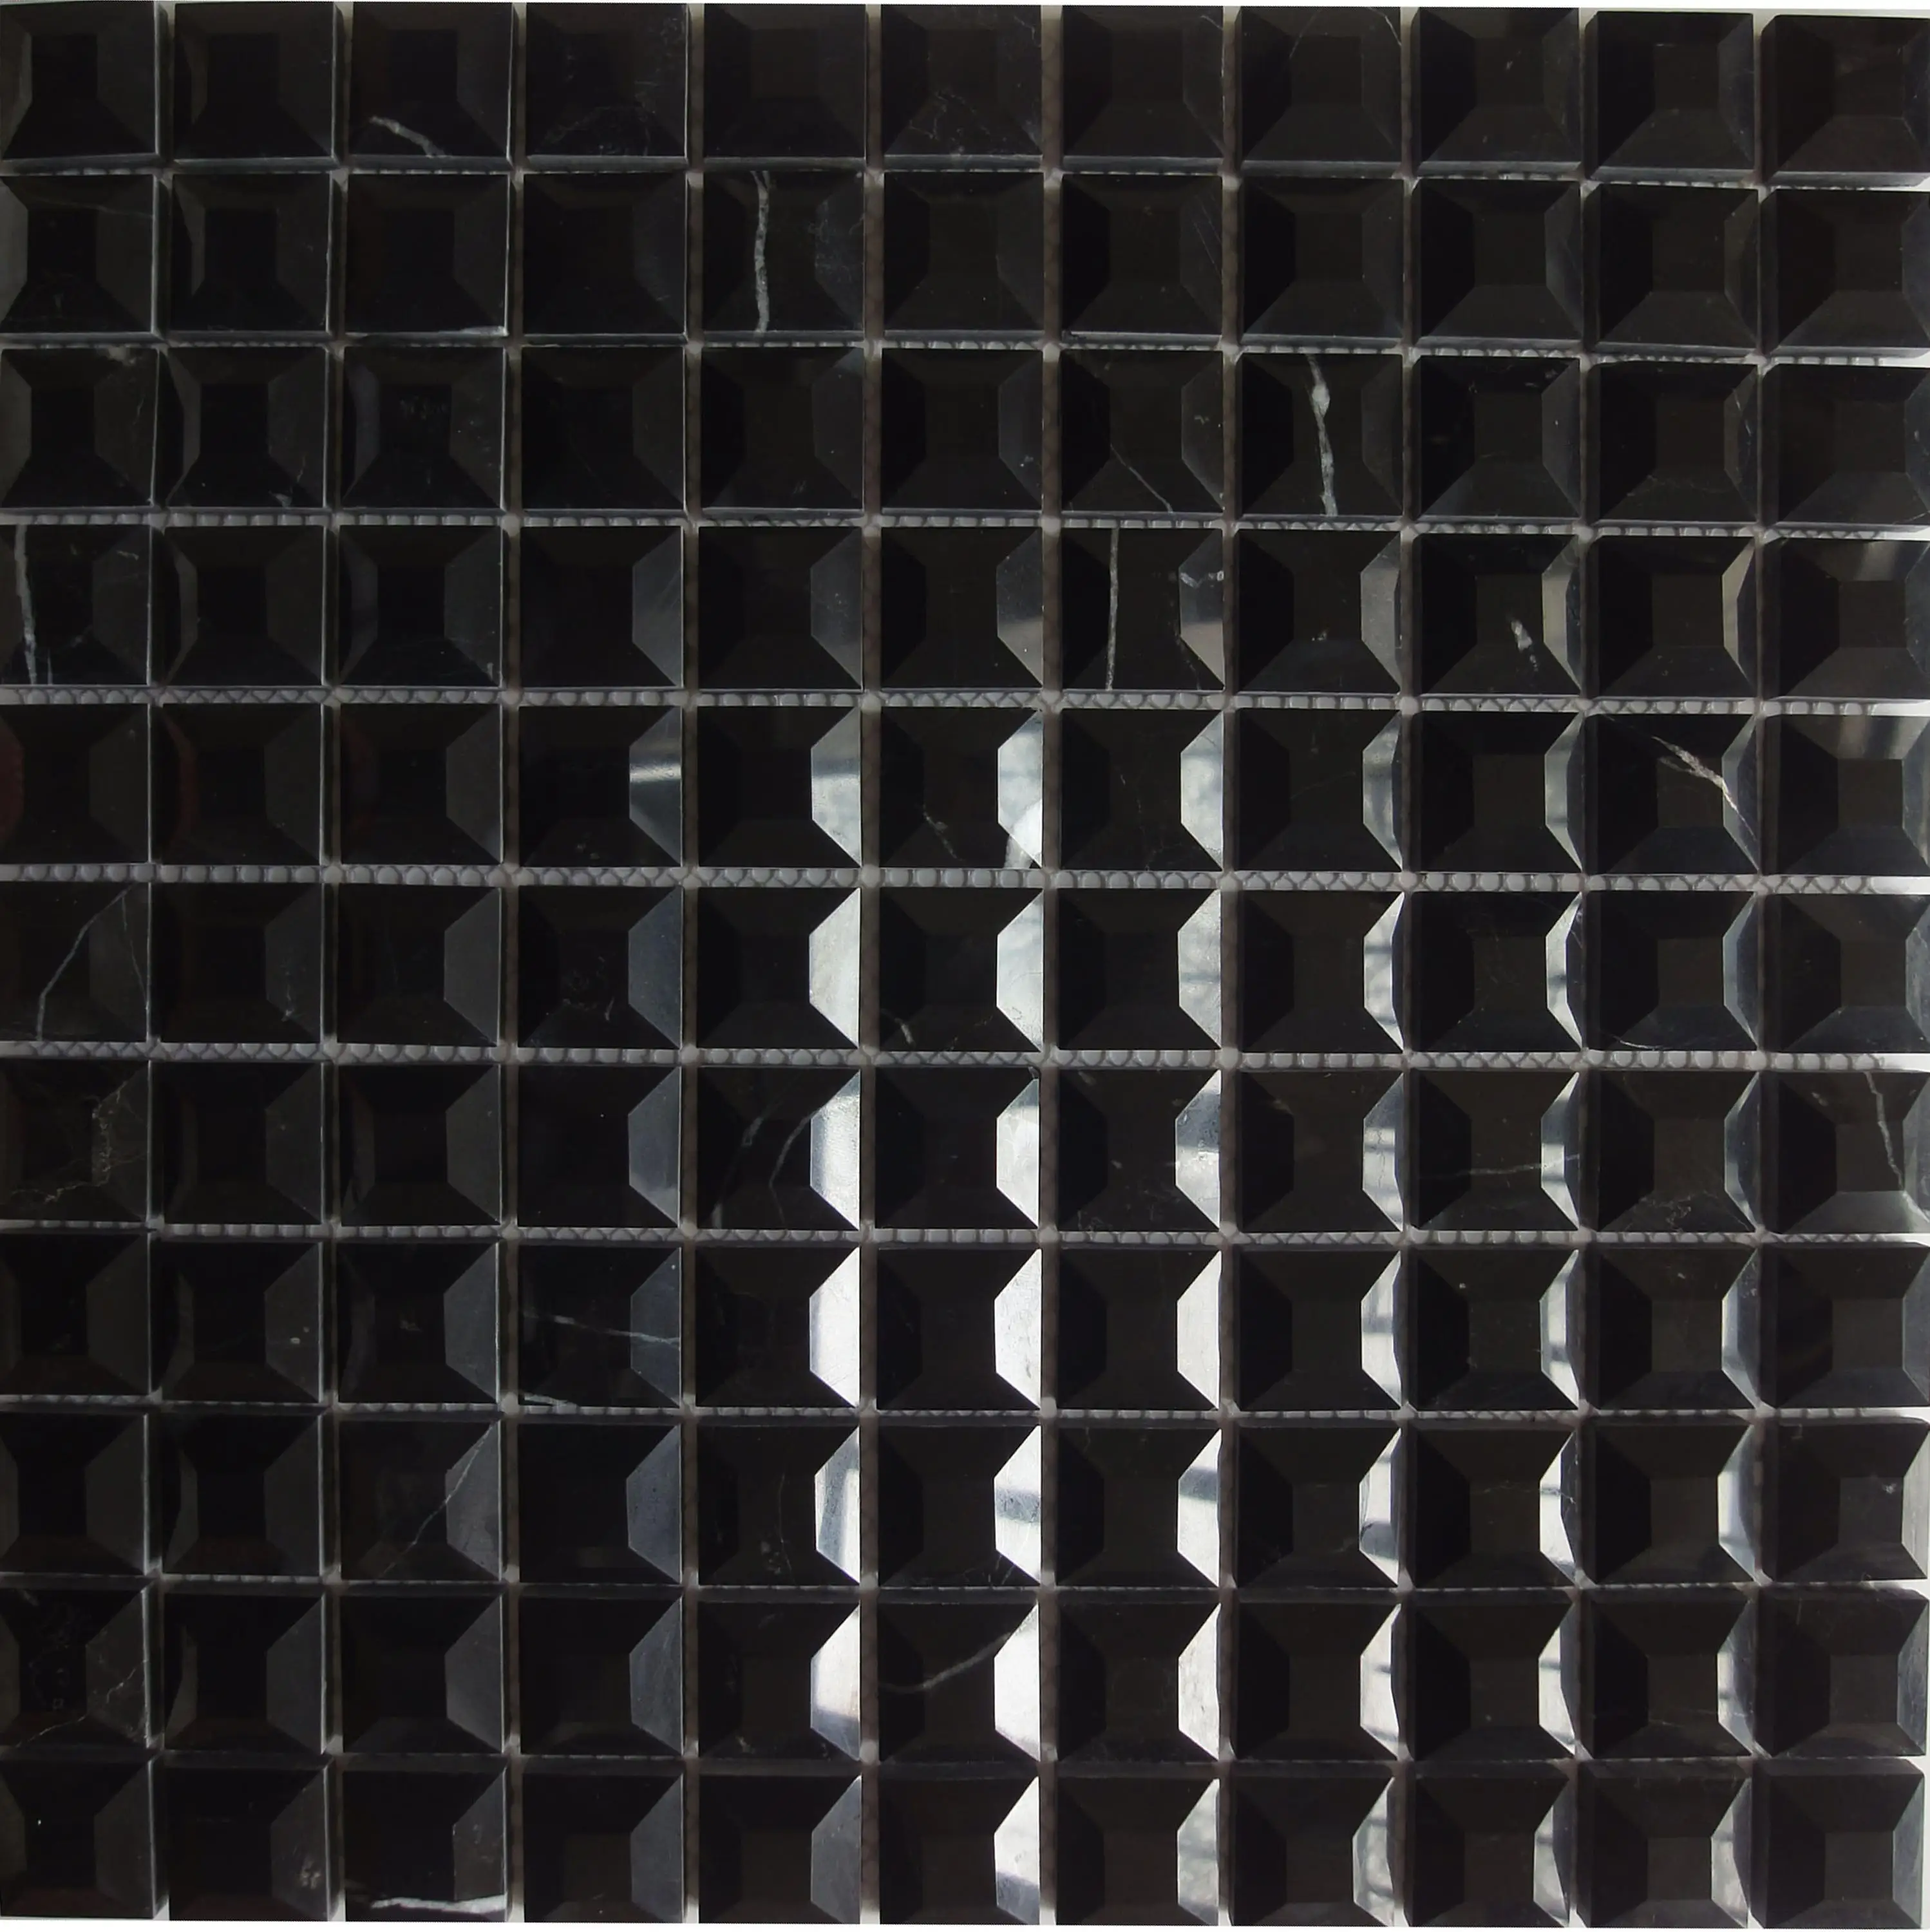 Black Marble Mosaic Tile, Black Mosaic Tiles, Black Stone Wall Tiles (KS20130008)